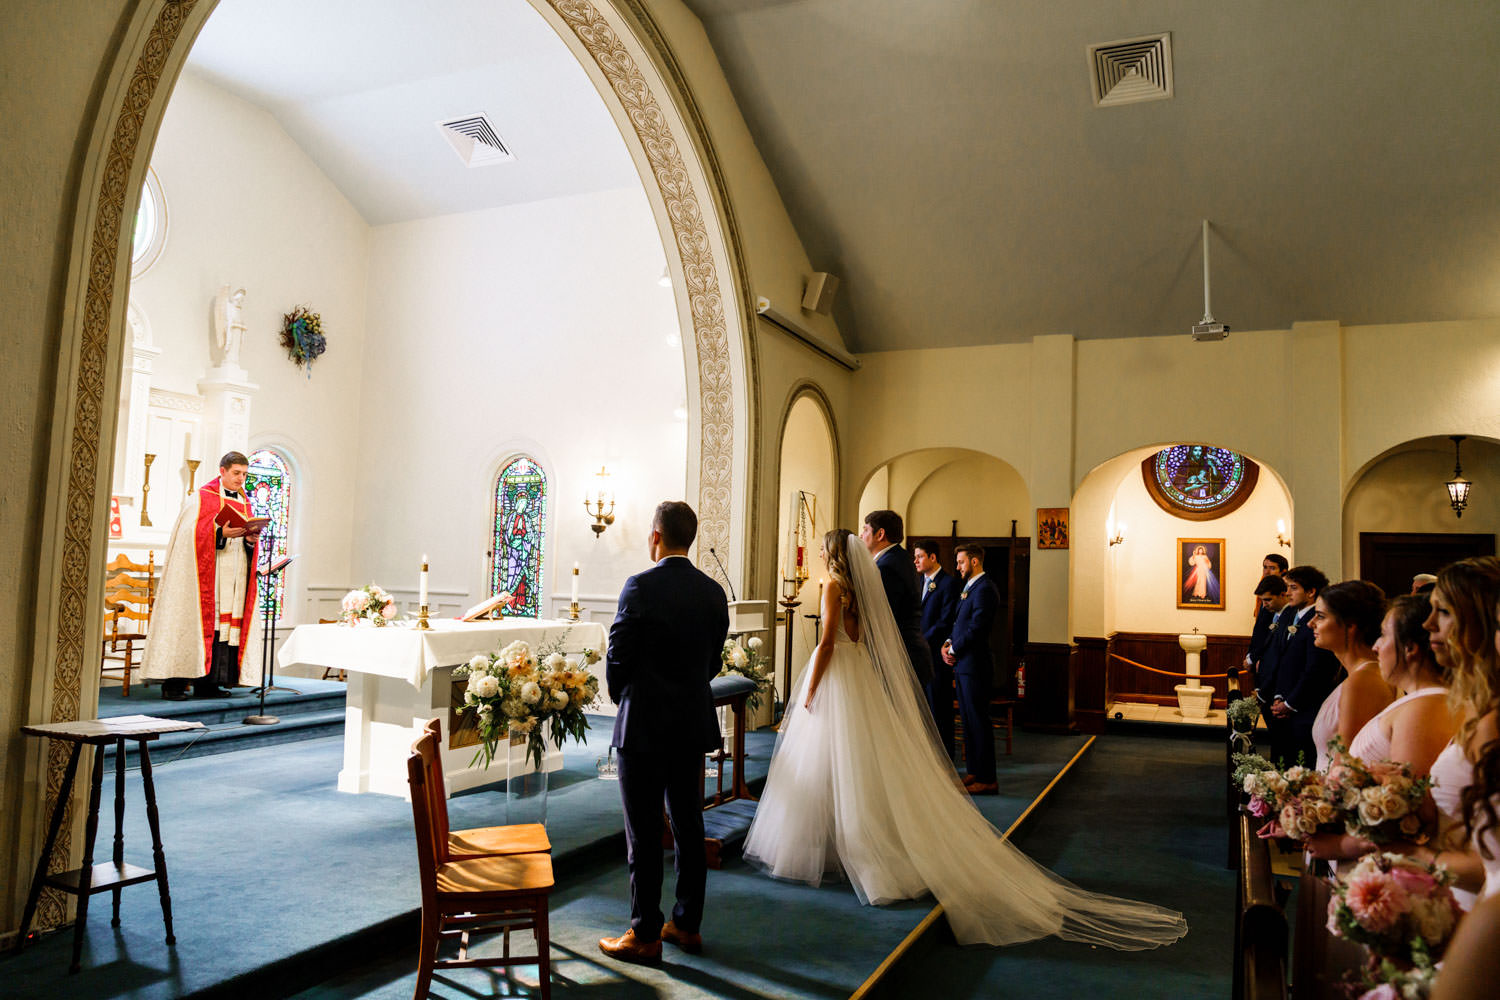 Edgartown St. Elizabeth's Church wedding ceremony